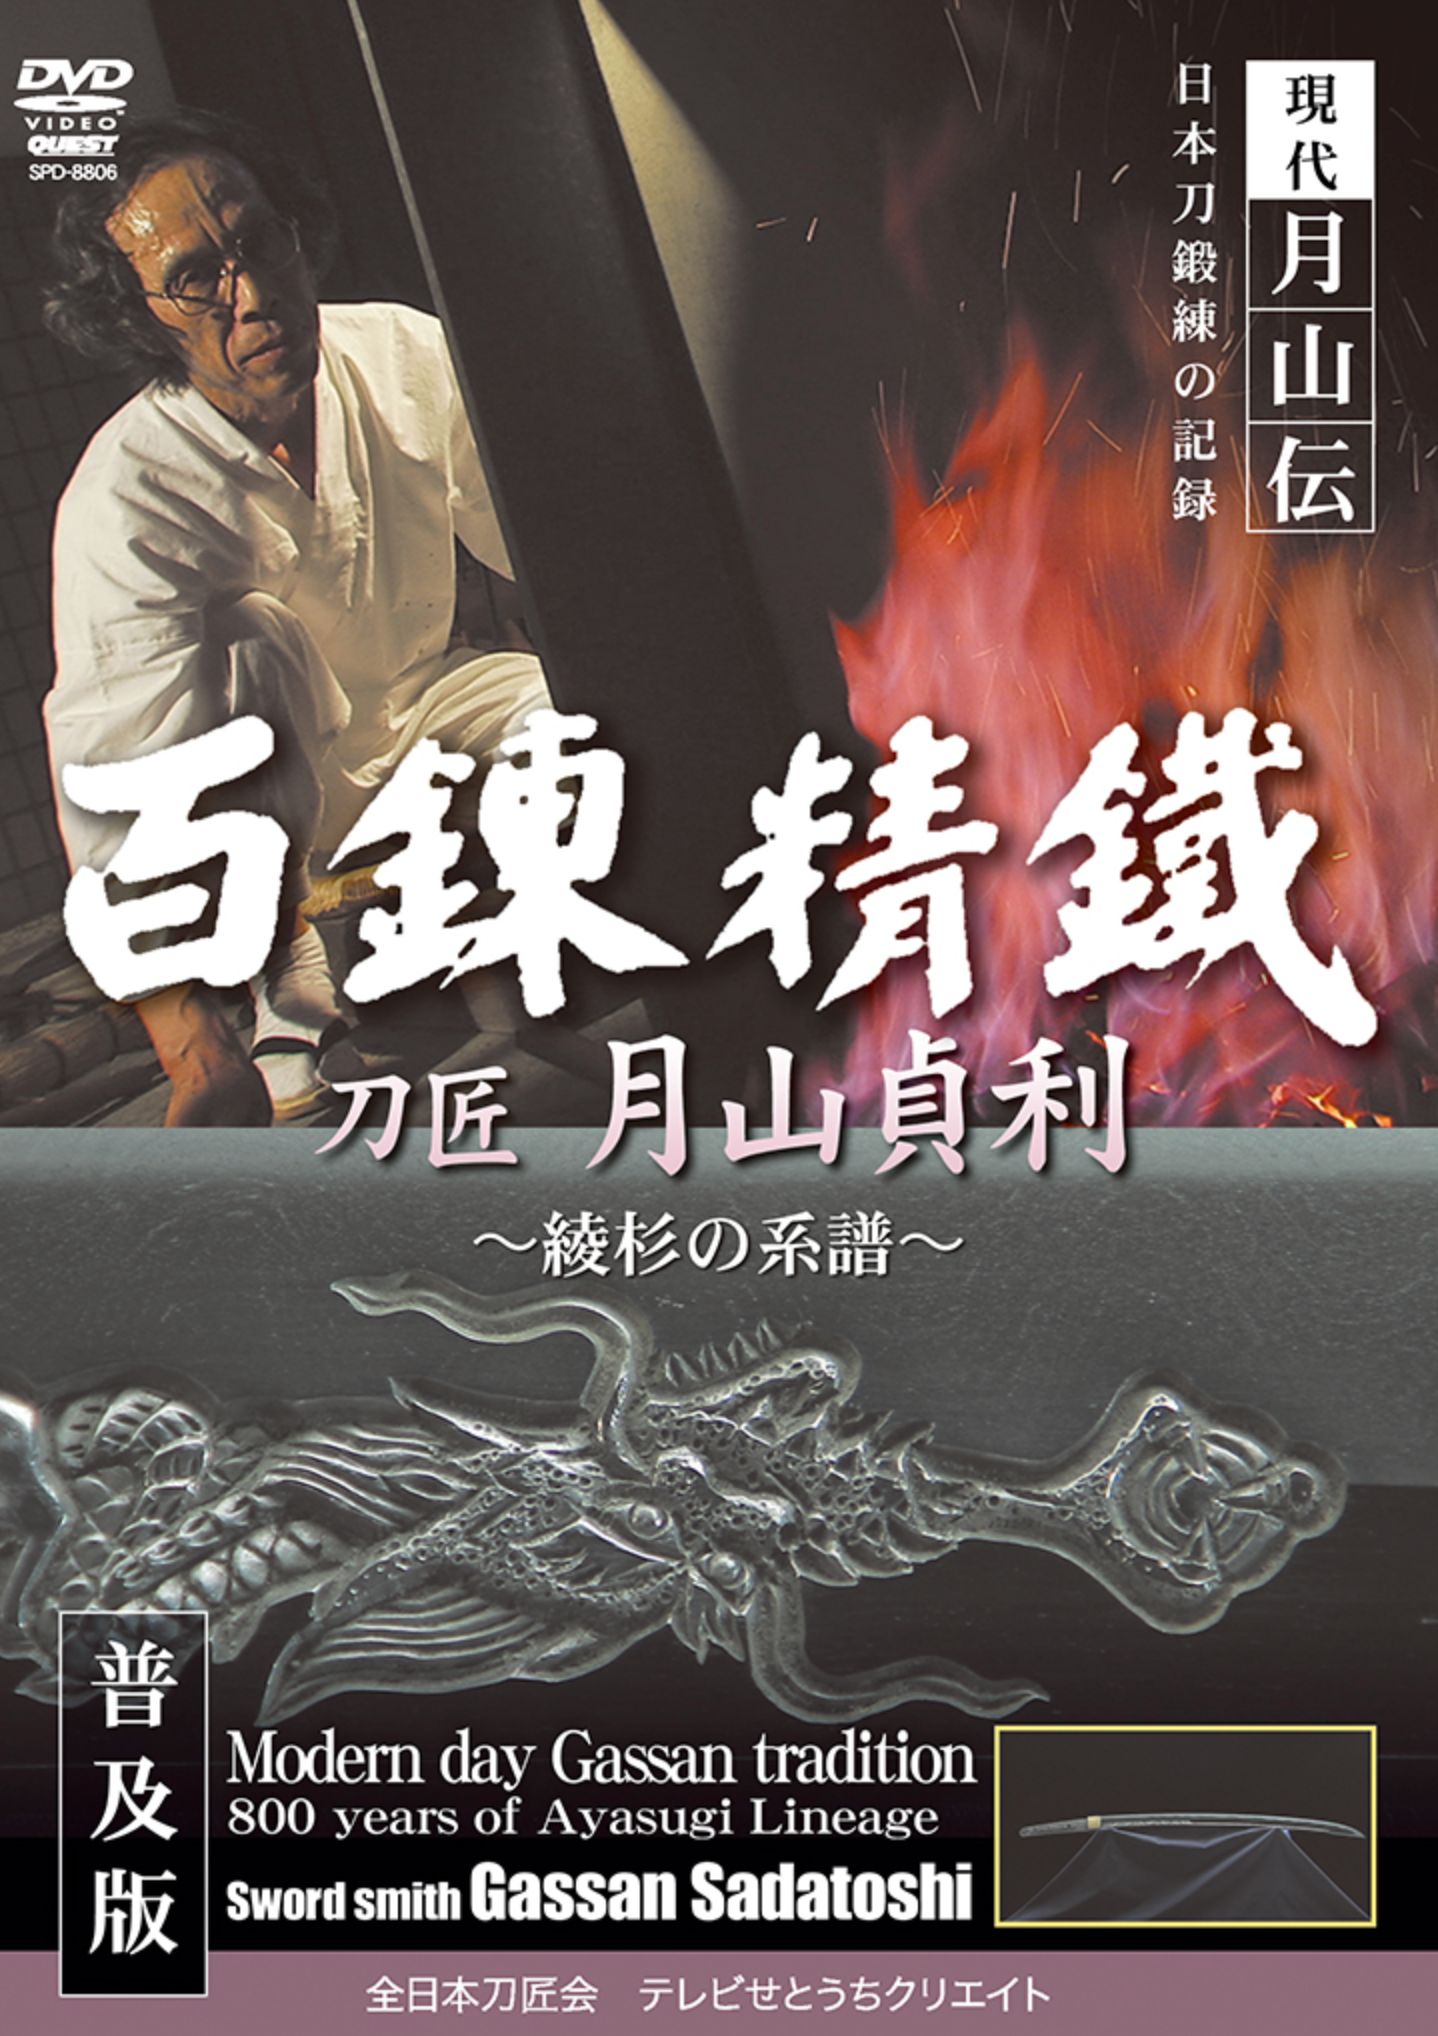 Modern Day Gassan Swordmaking Tradition DVD by Gassan Sadatoshi - Budovideos